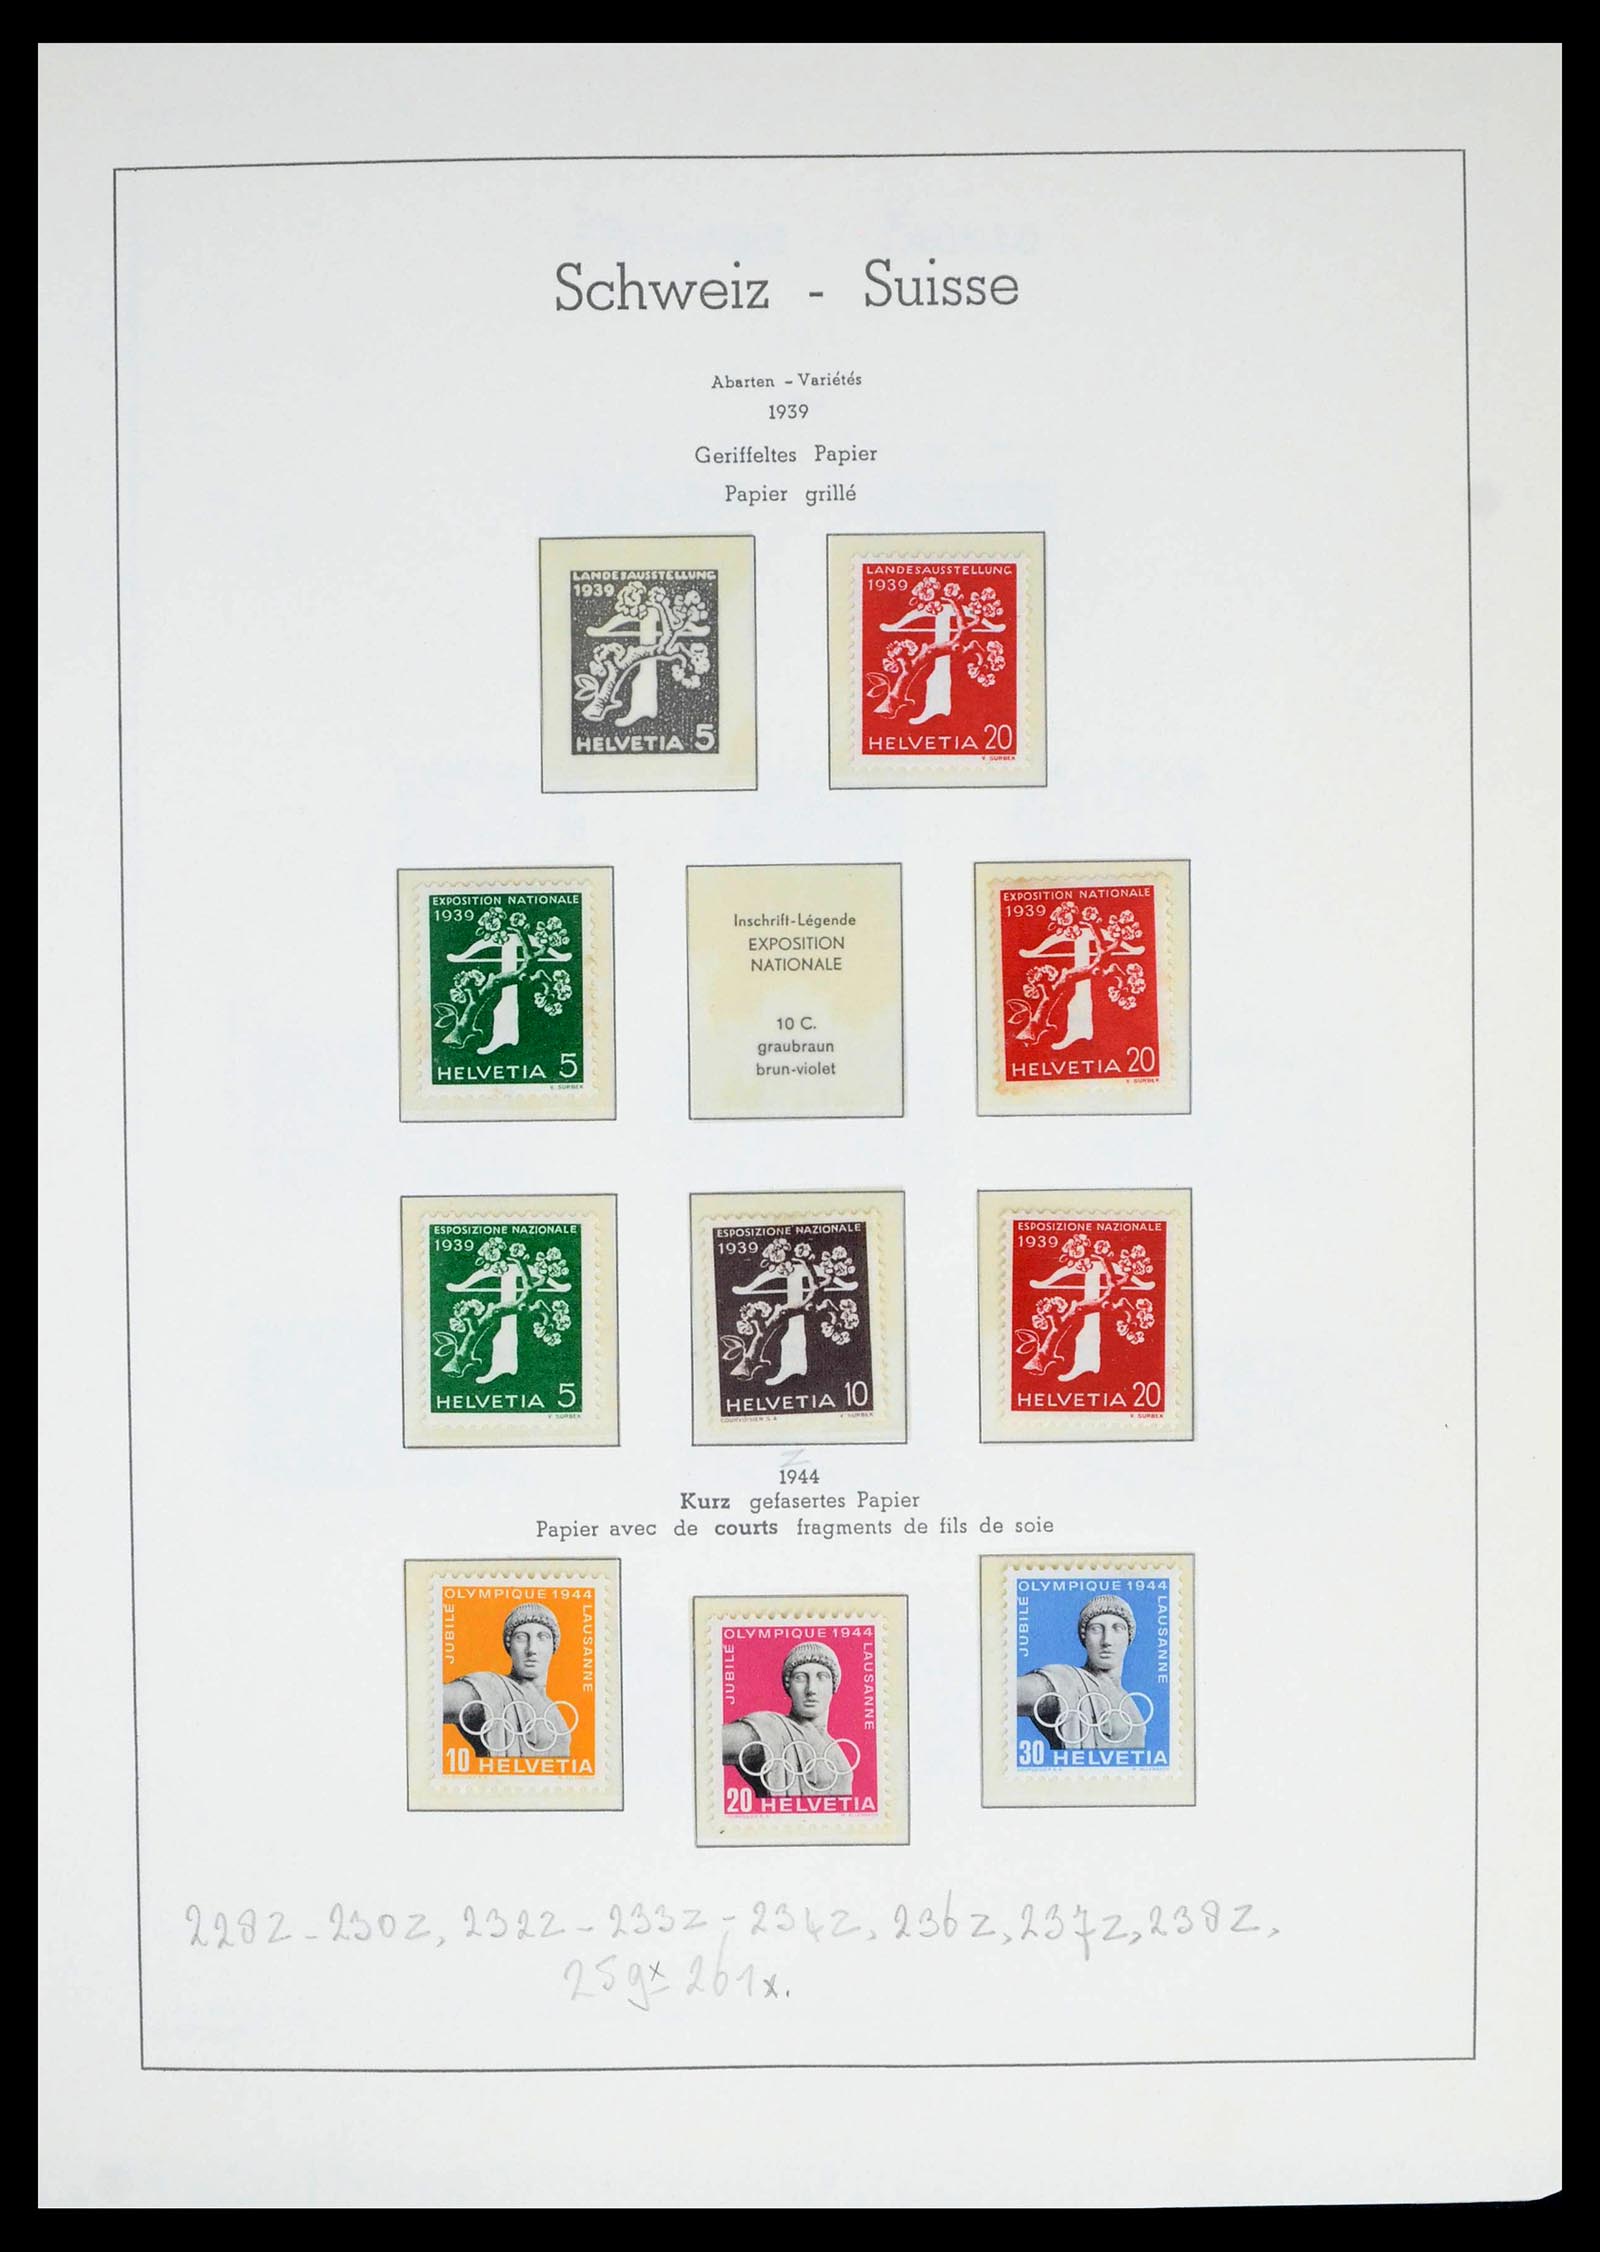 39420 0027 - Stamp collection 39420 Switzerland 1862-1974.